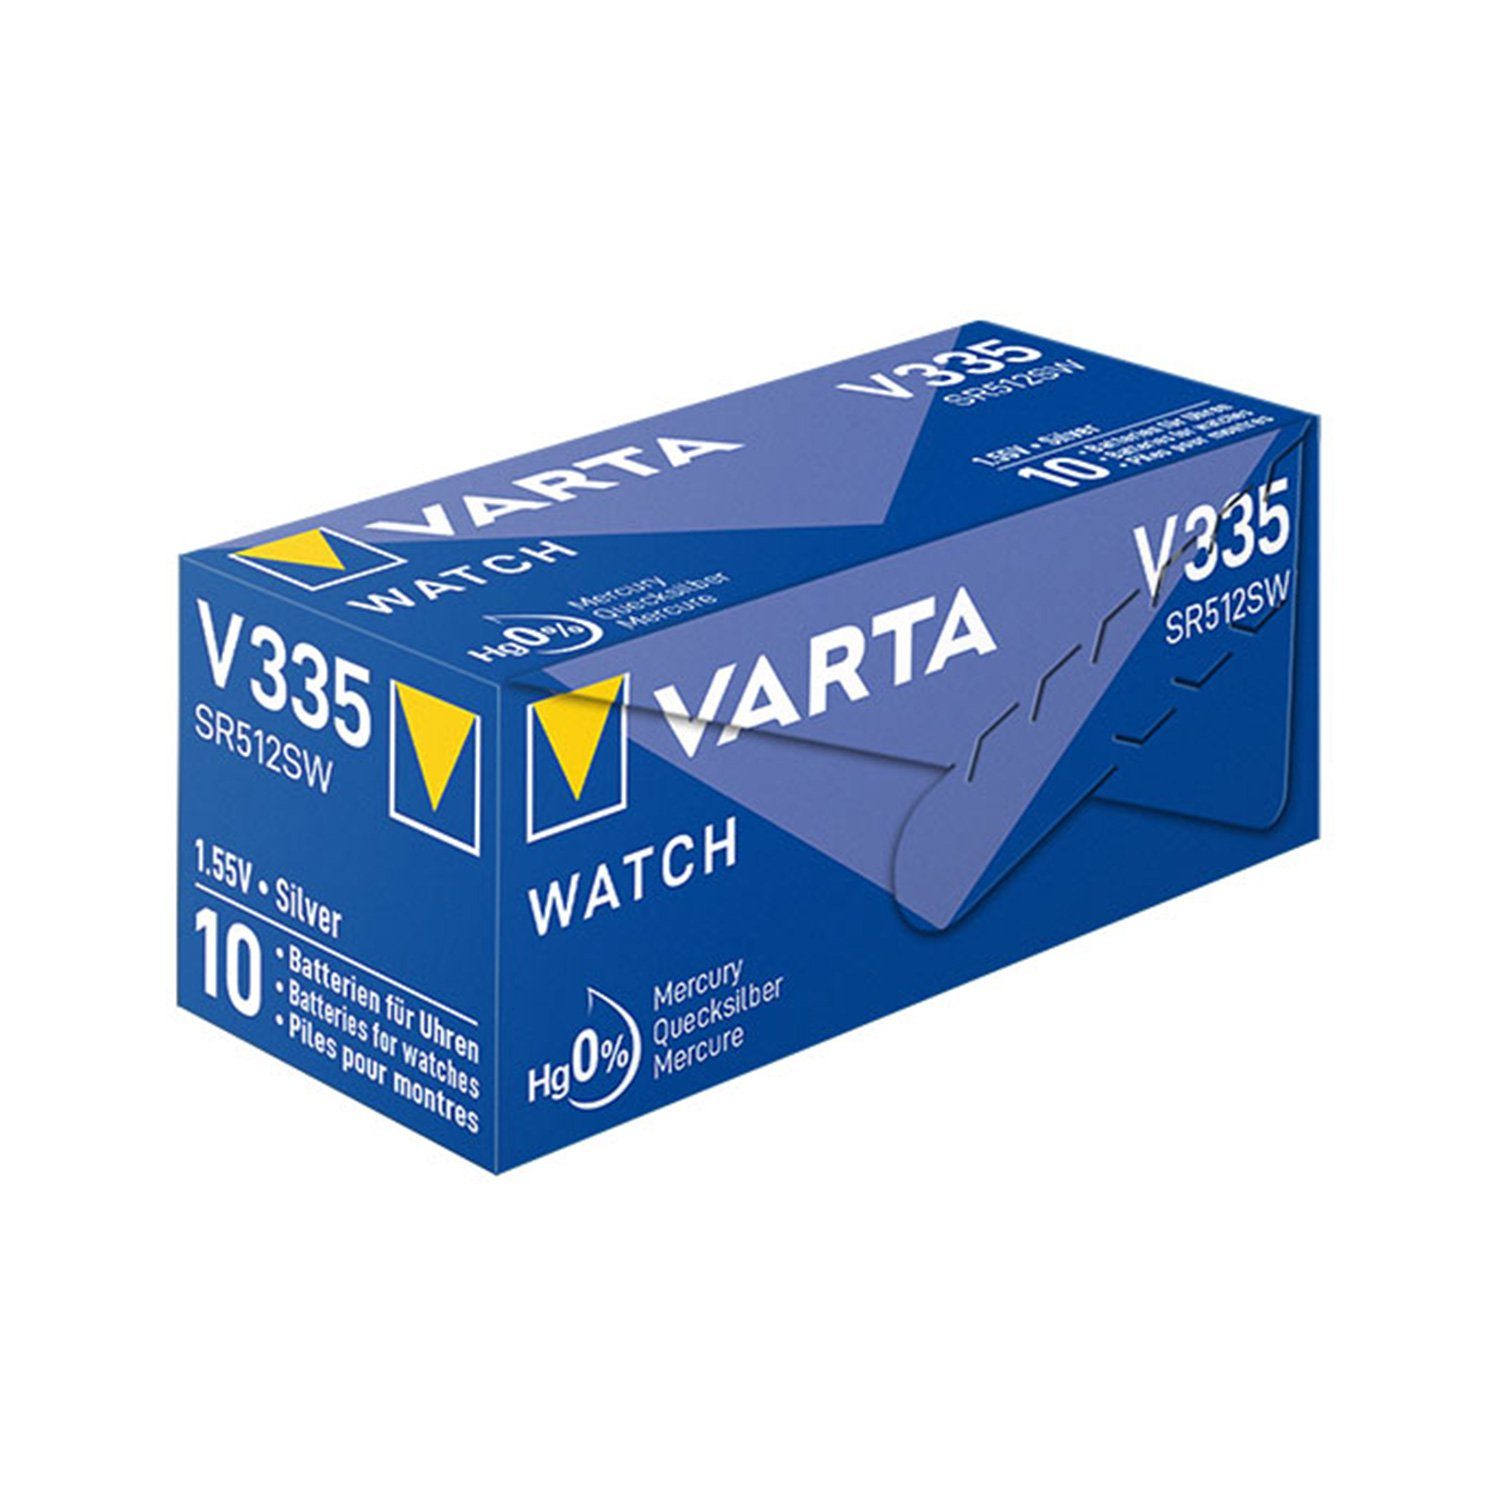 Knopfzelle Varta VARTA 335 Batterie